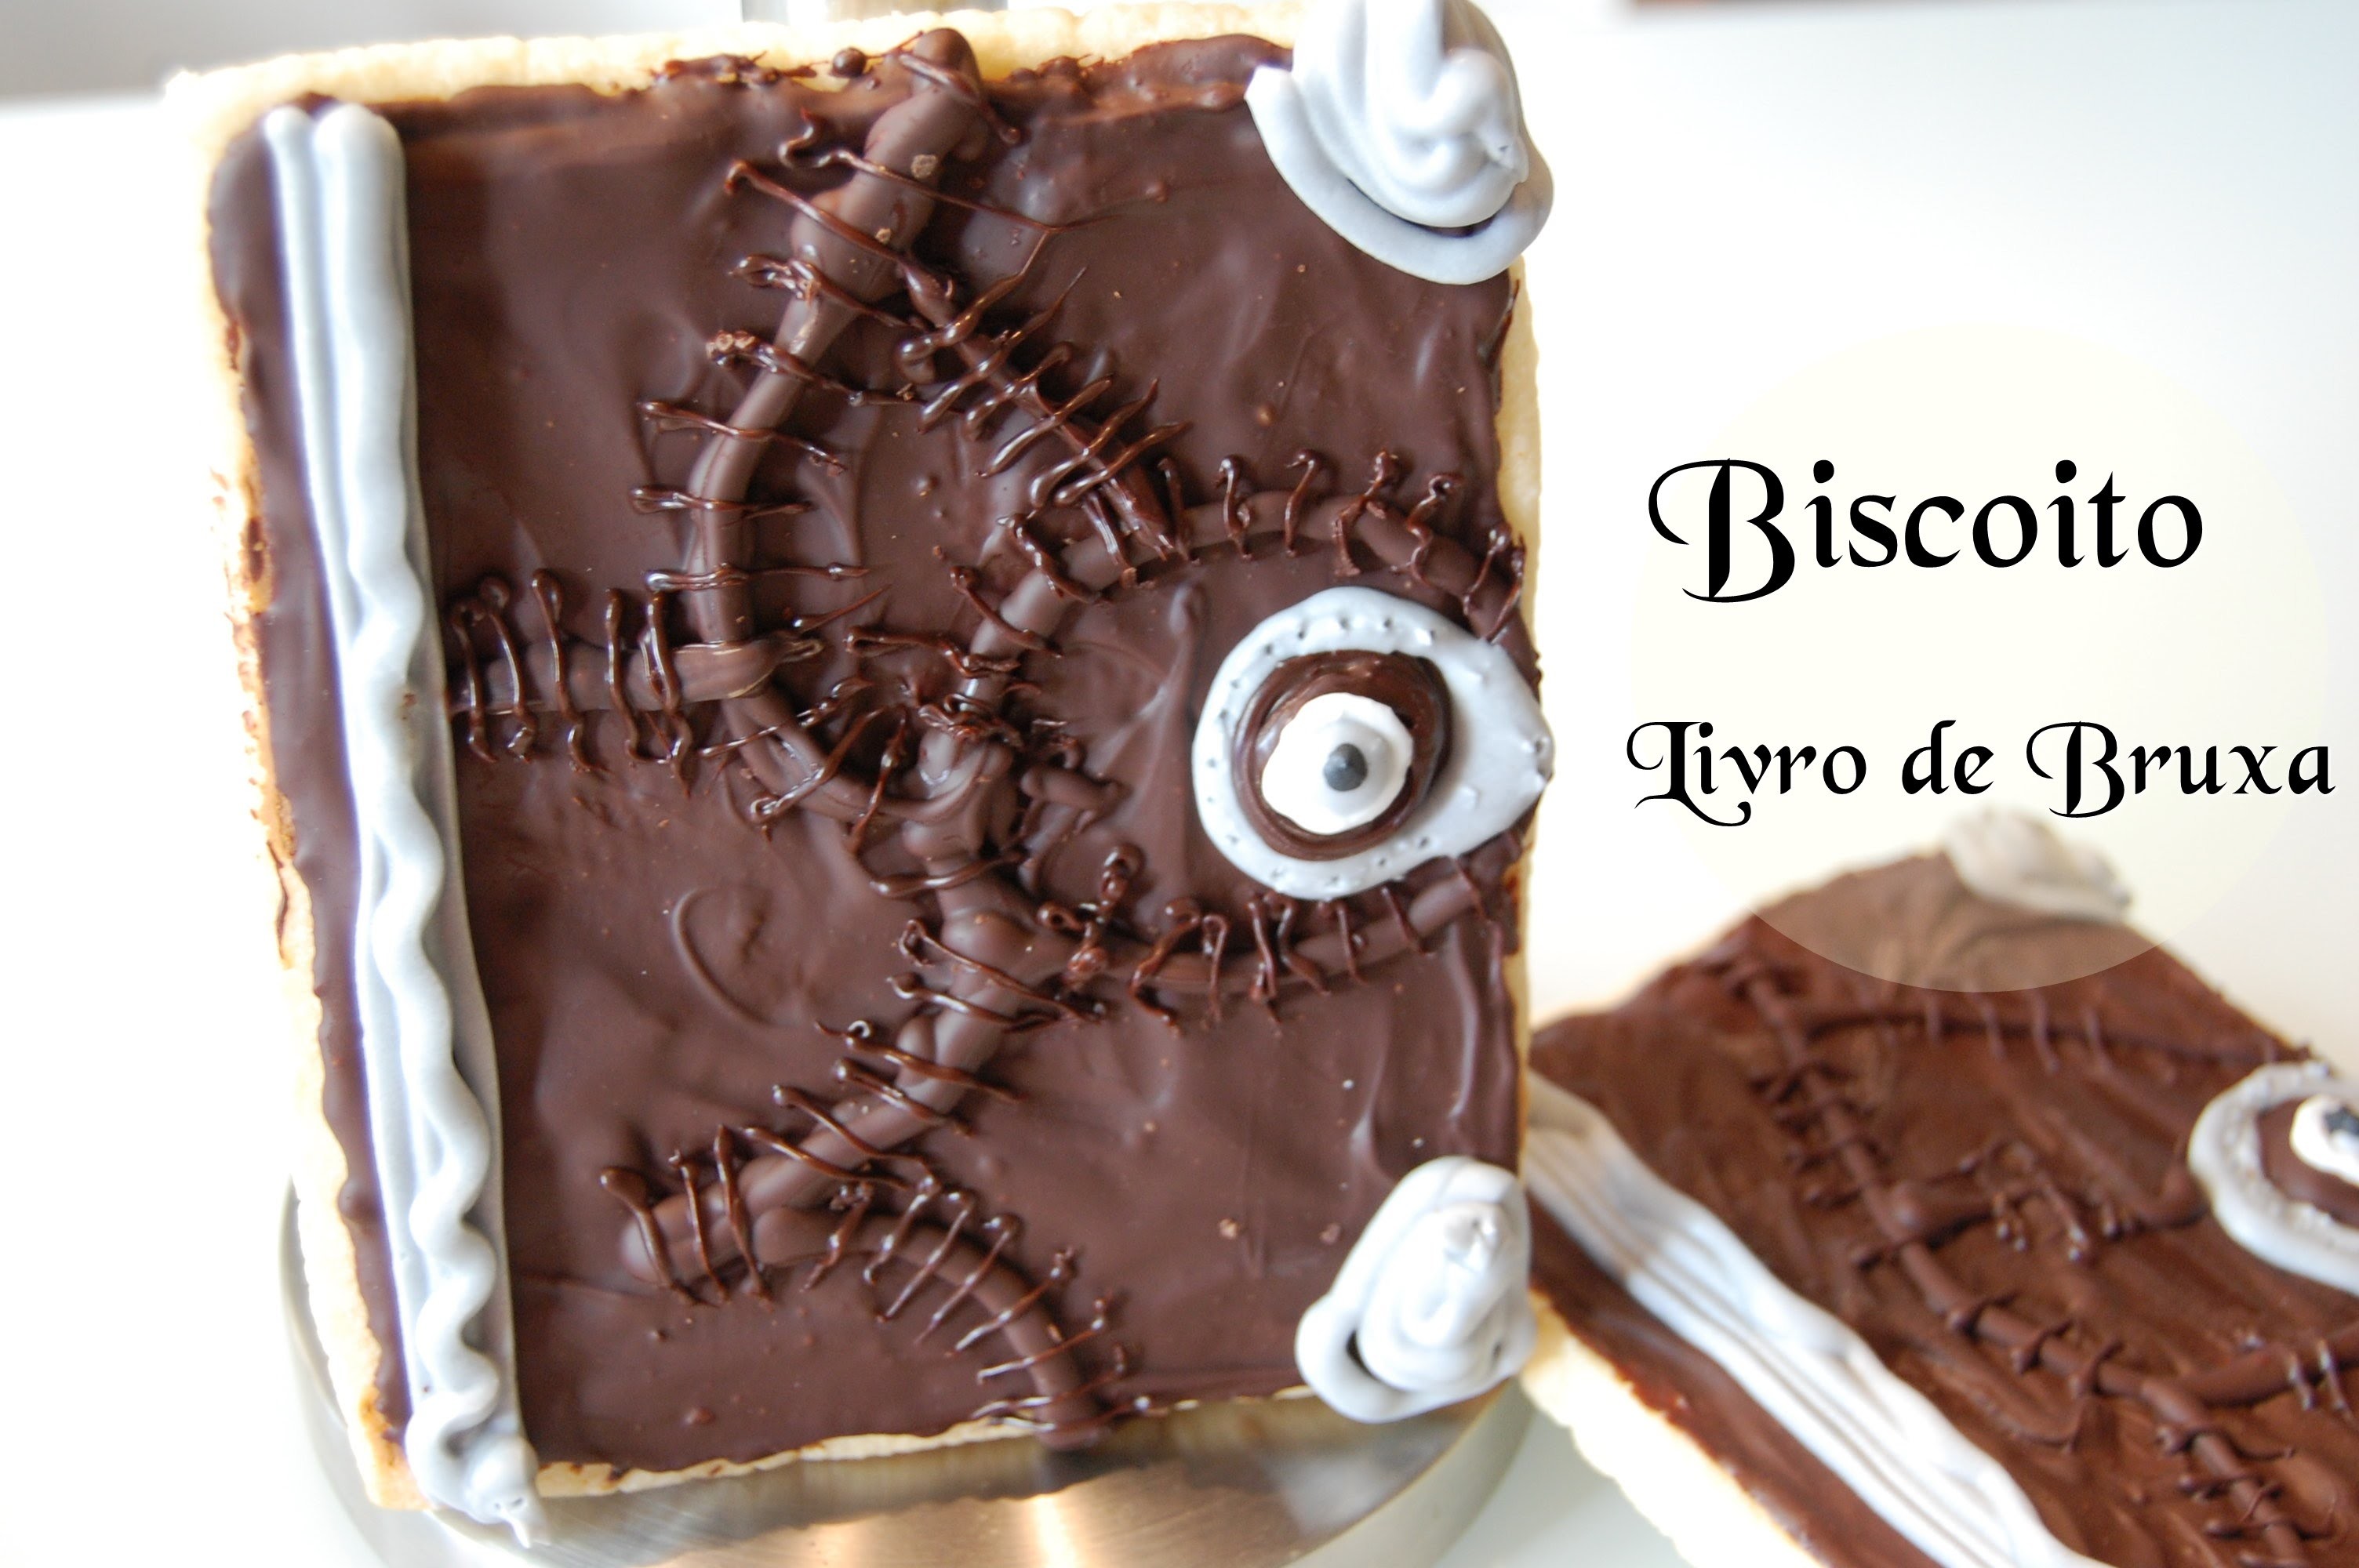 DIY Receita Biscoito Livro de Bruxa  #Halloween food 22